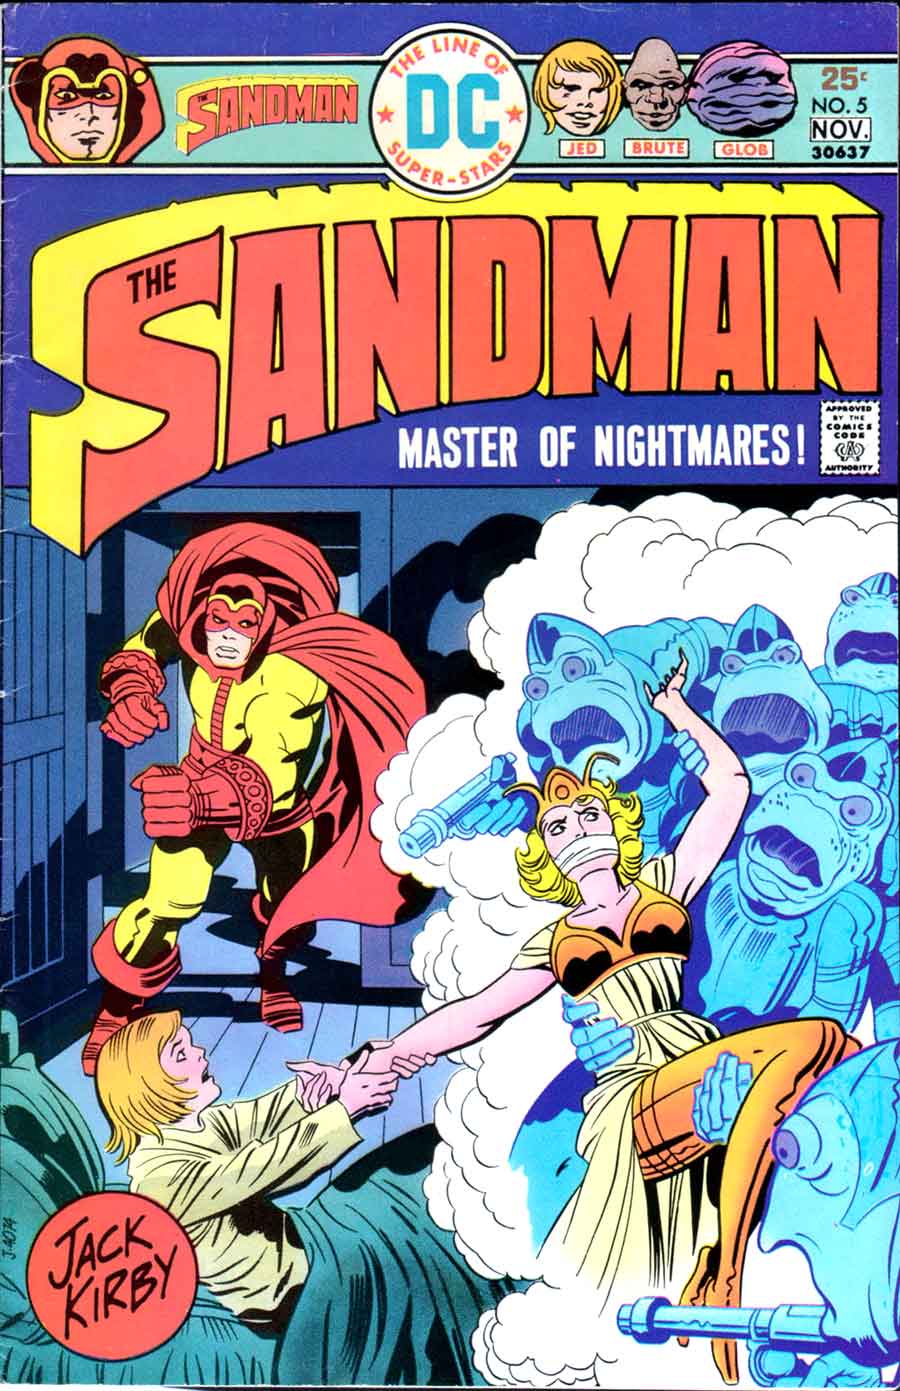 The Sandman v1 #5 dc bronze age comic book cover art by Jack Kirby